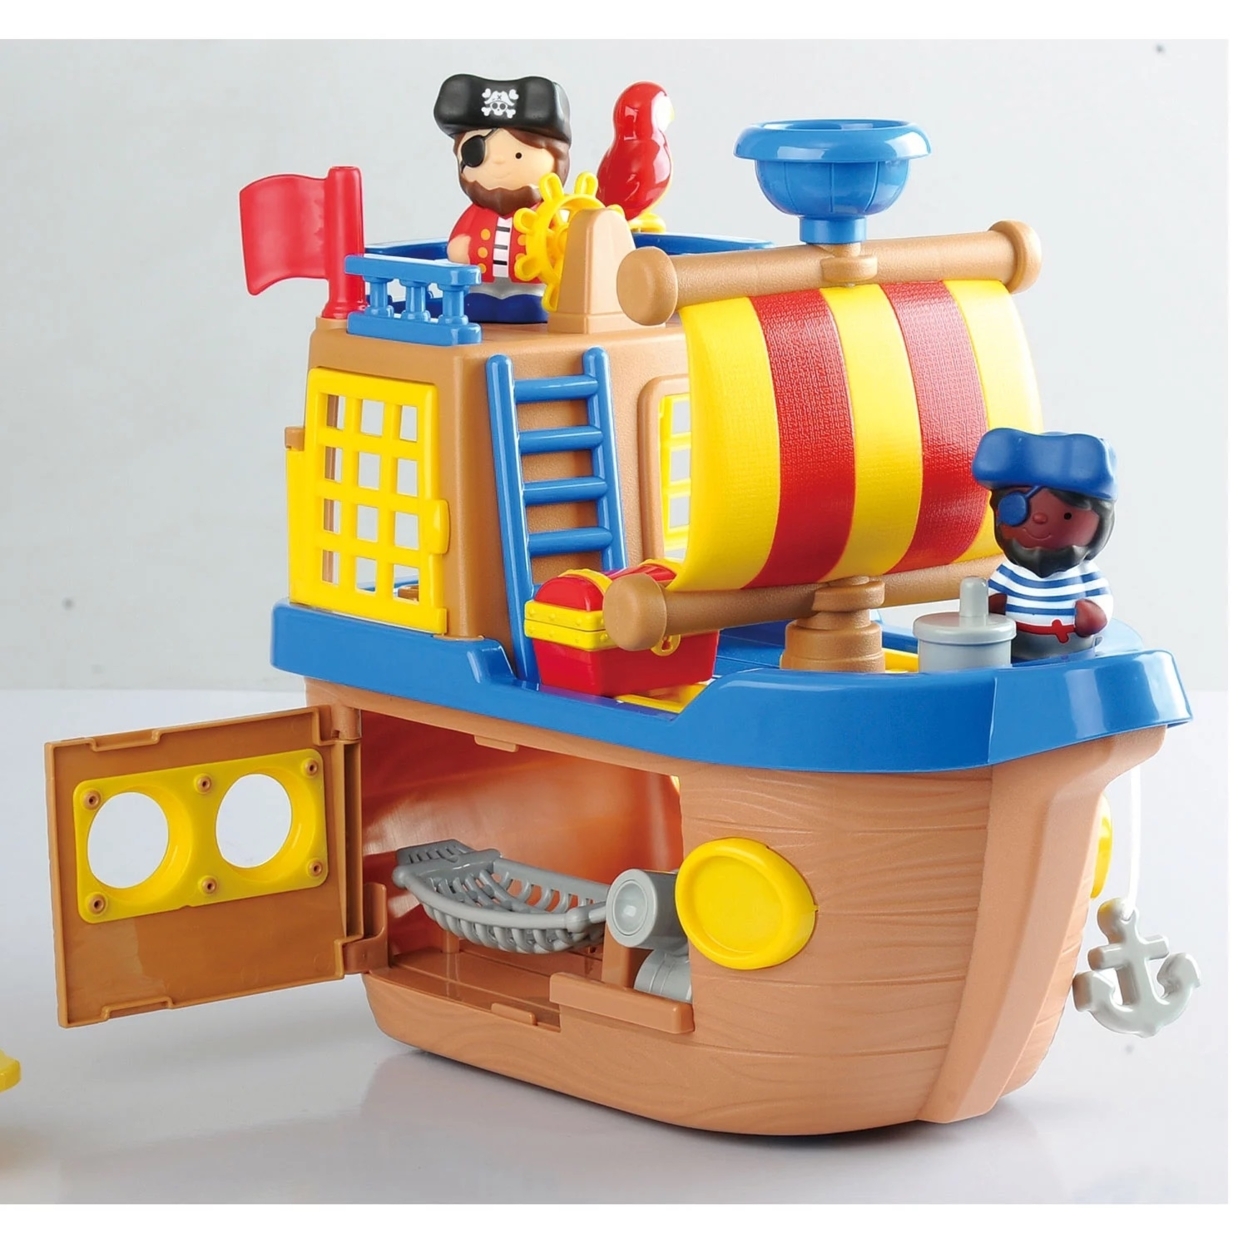 Member's Mark Preschool Playset, Pirate Ship